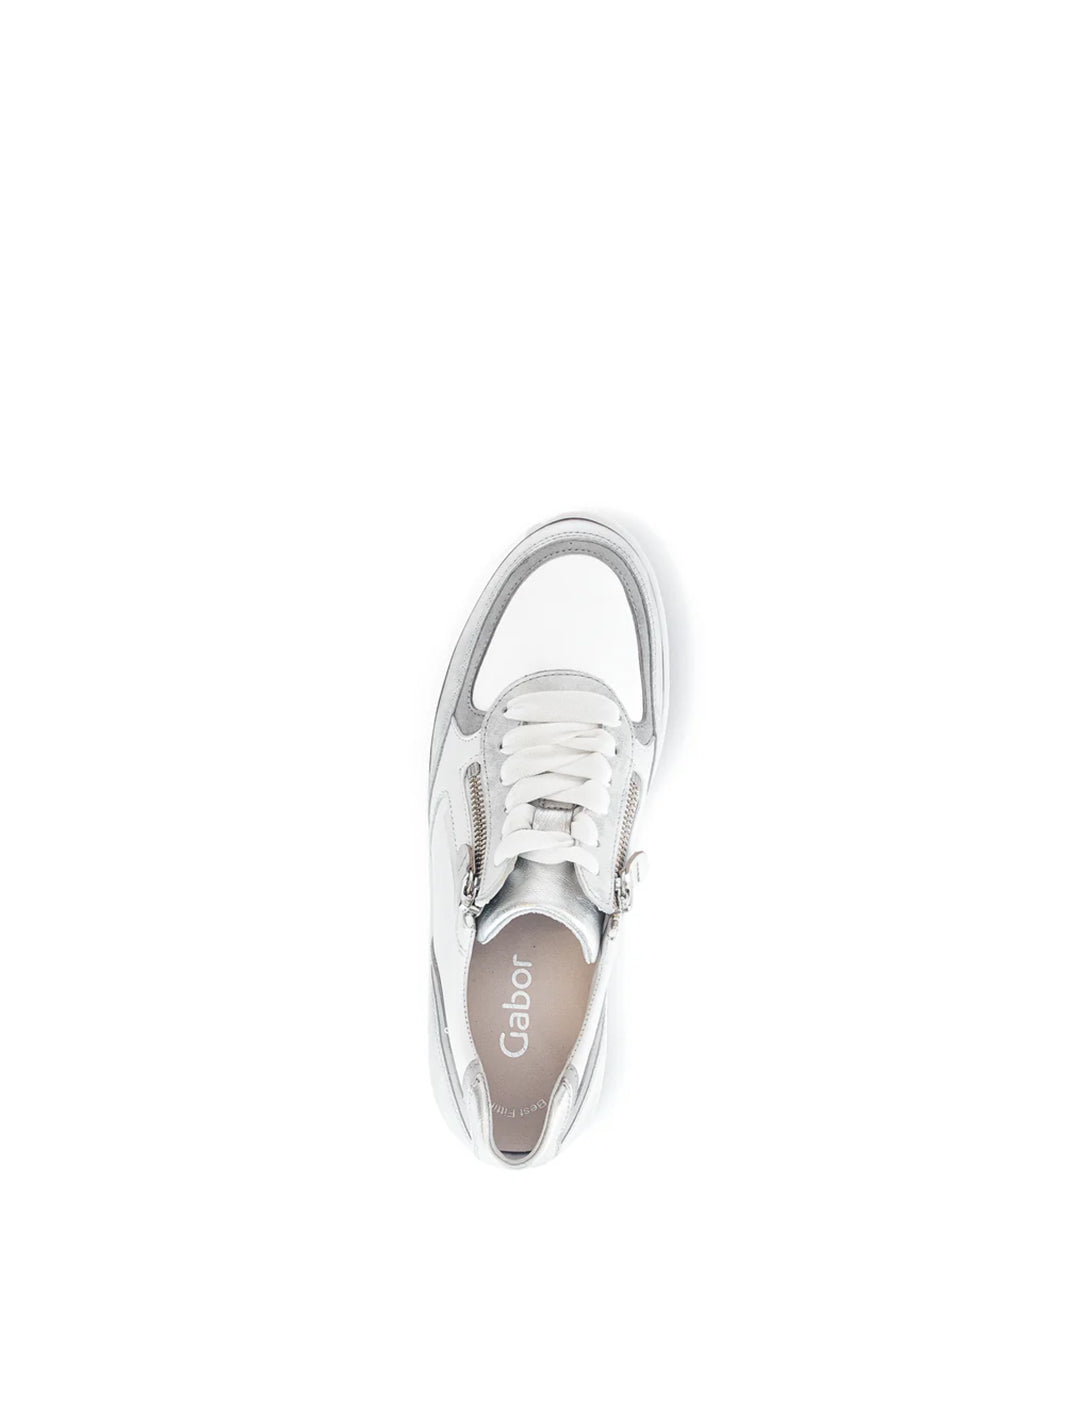 Sneaker in White/Gray Combination